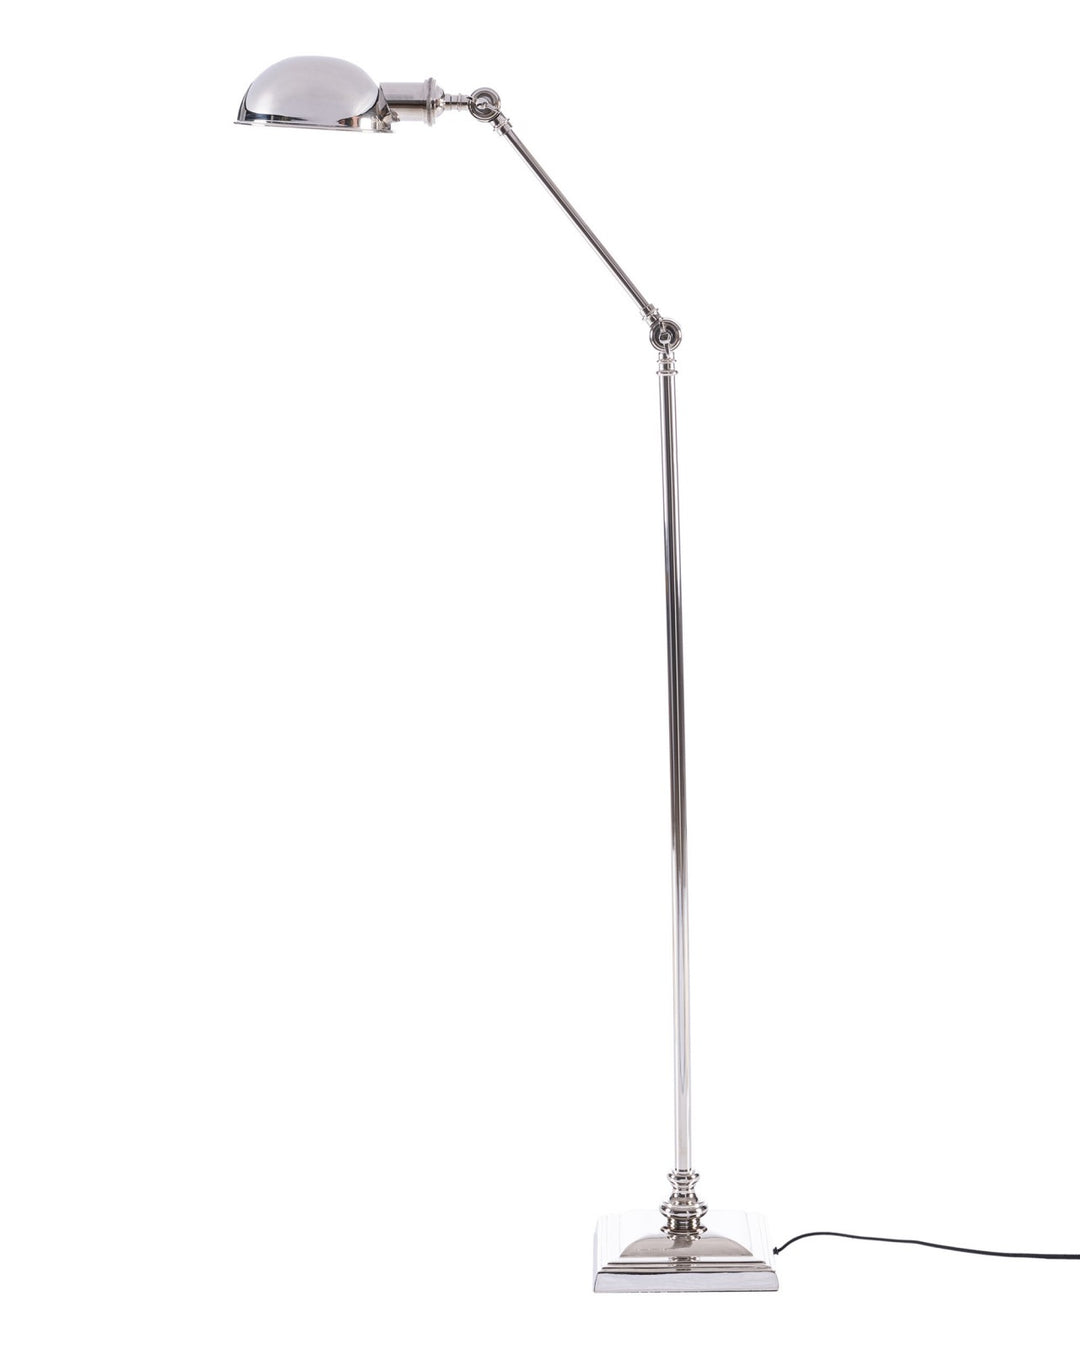 Mind-the-gap-Jefferson-adjustable-floor-light-lamp-brass-nickel-finish-two-joints-reading-task-lighting